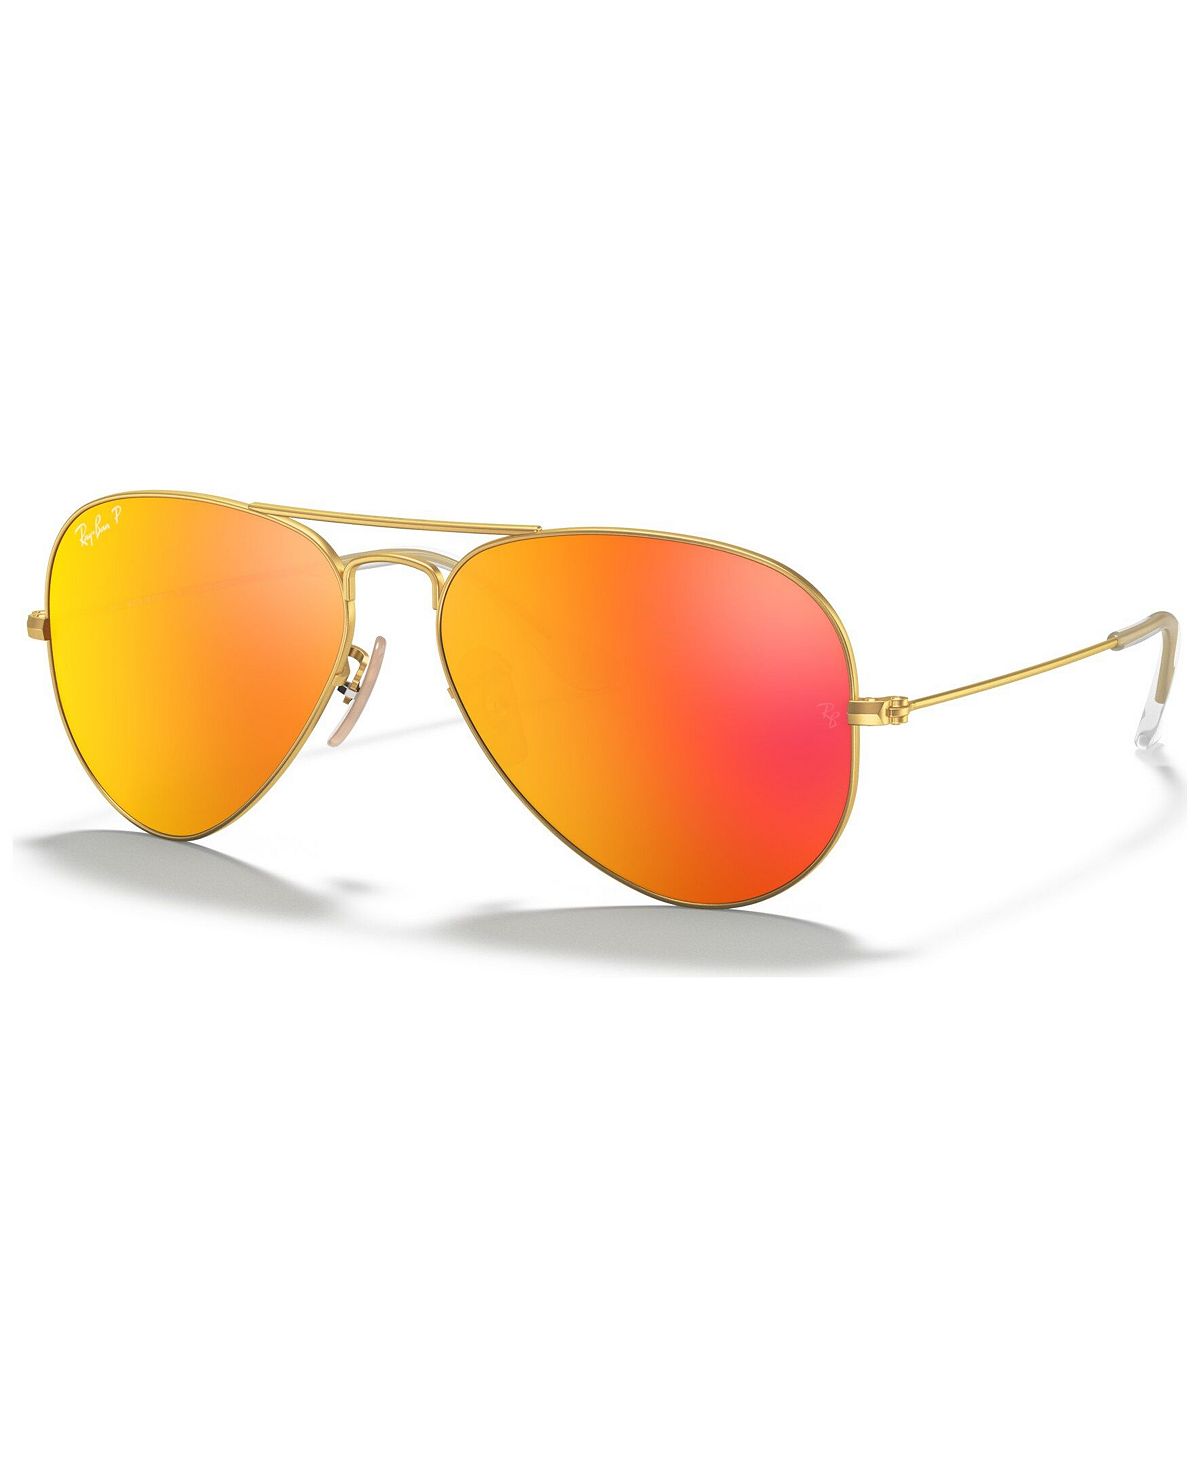 gammarus amphipod orange gold 12 Поляризационные солнцезащитные очки, RB3025 AVIATOR MIRROR Ray-Ban